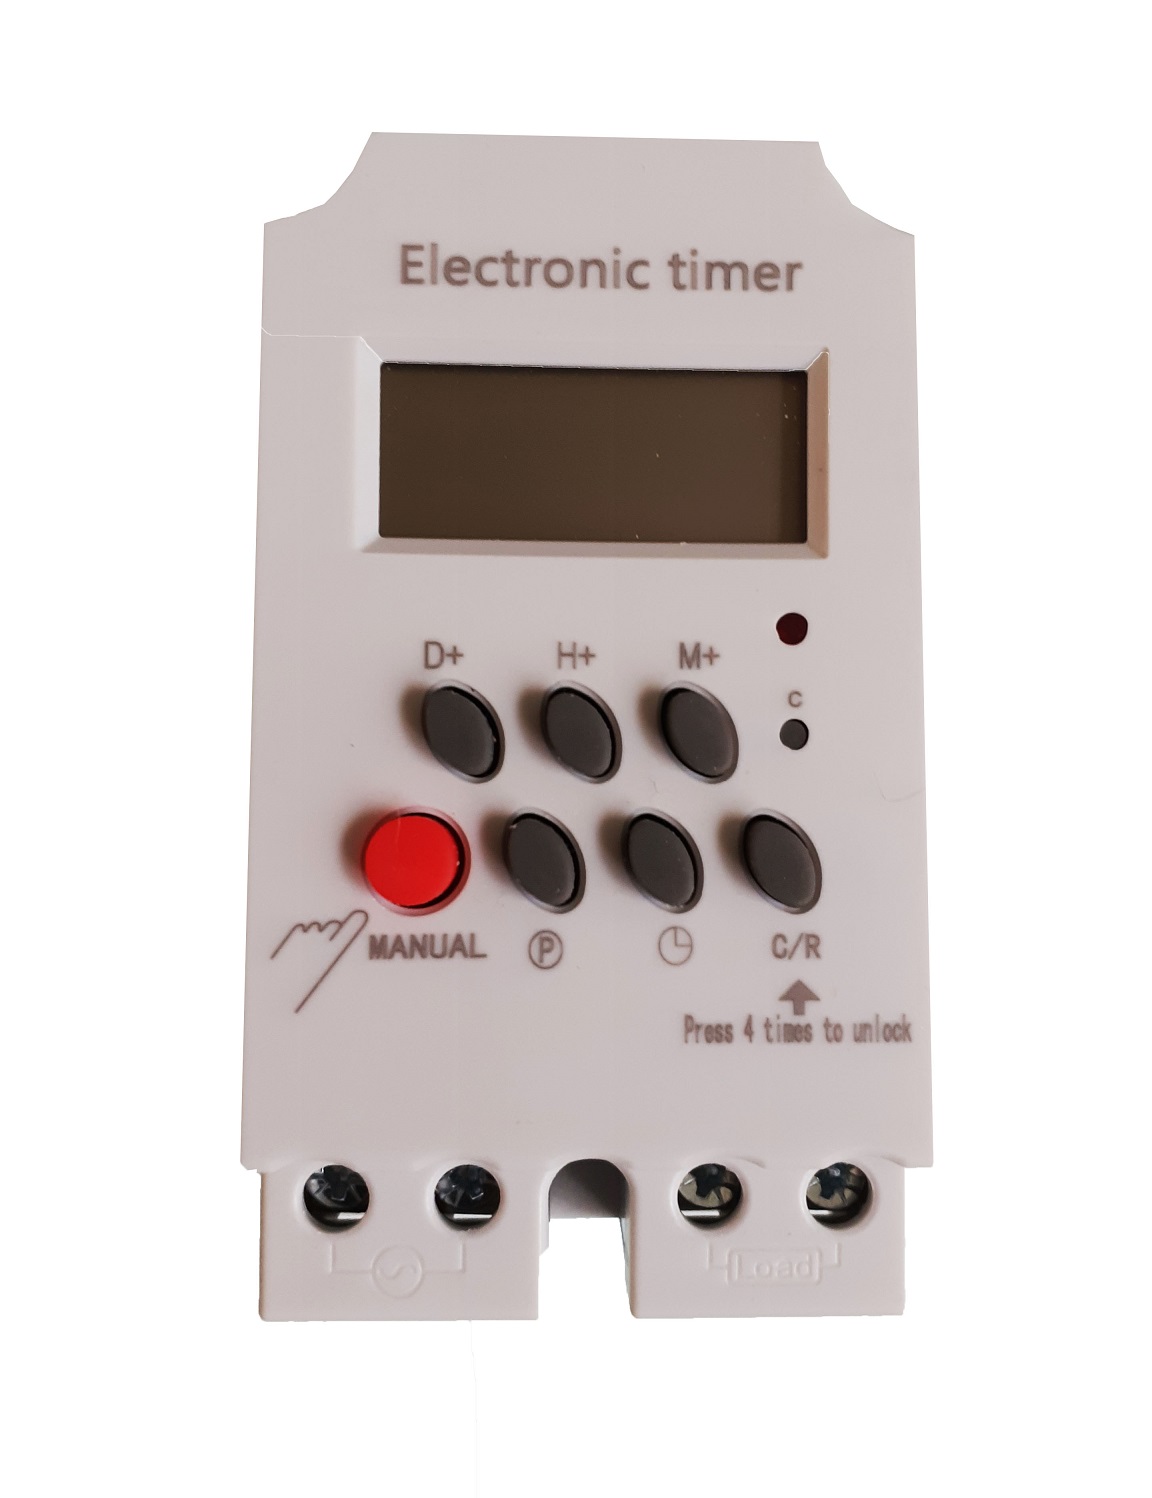 Electronic Digital Timer, Digital Electronic Timer